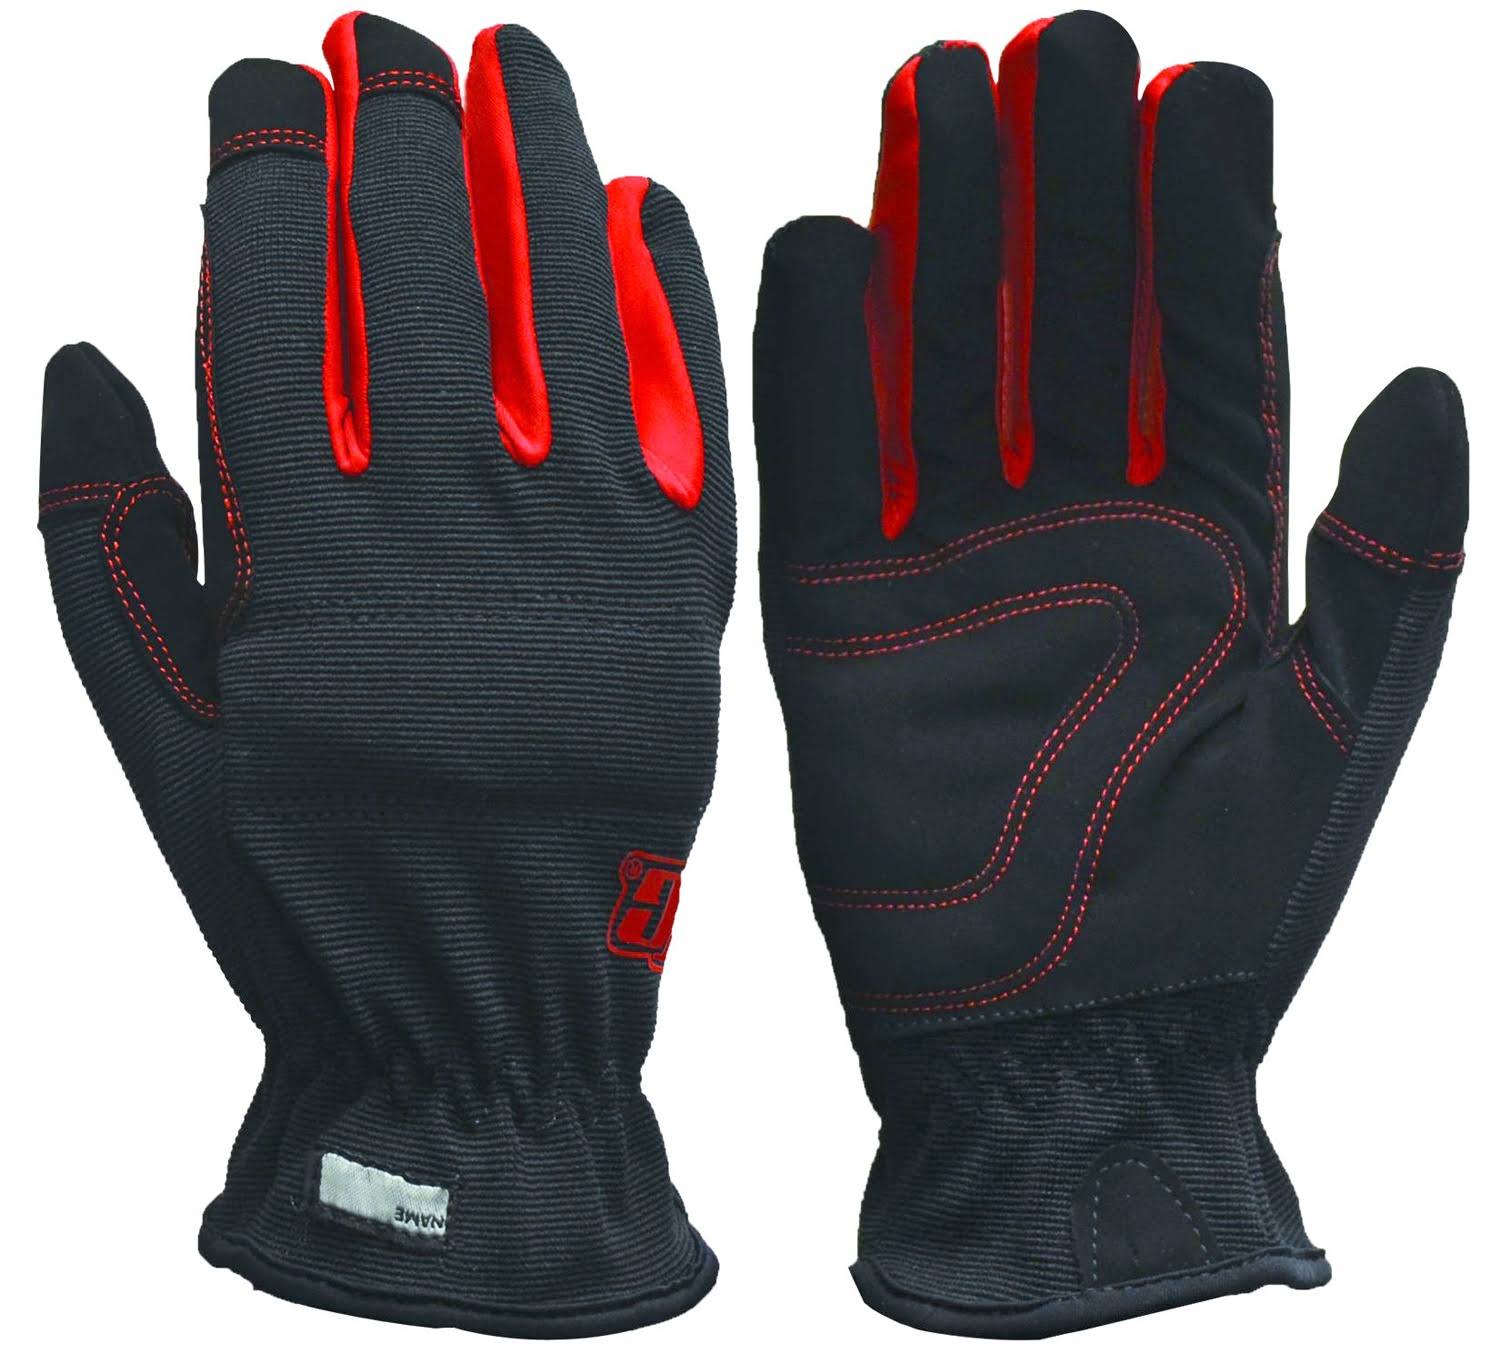 Big Time Products True Grip Medium Light Duty Utility Glove